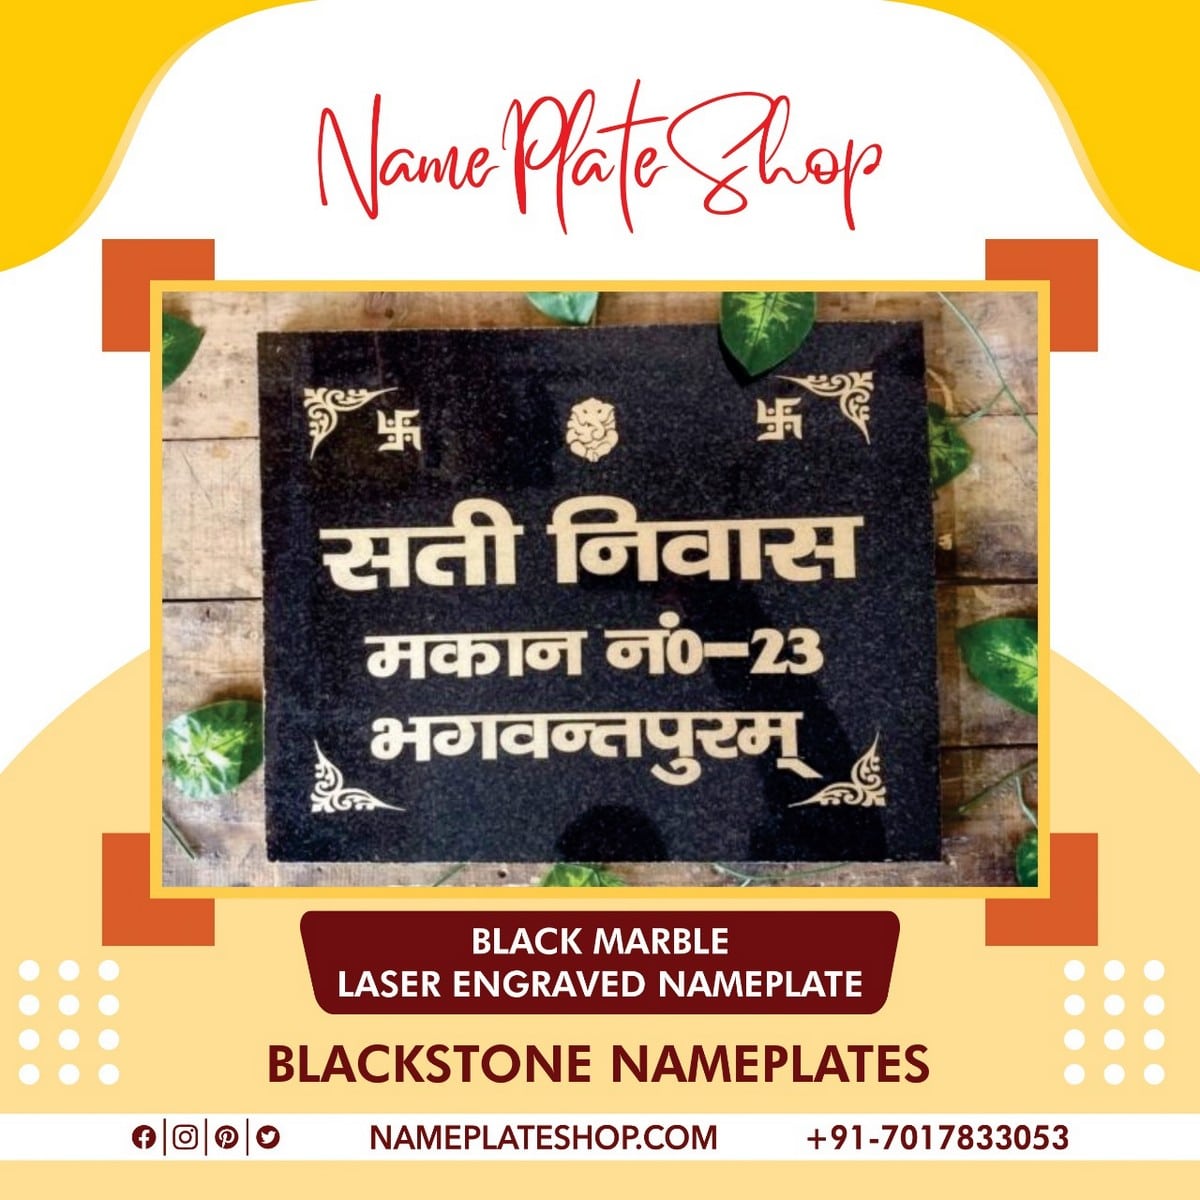 Blackstone Nameplates